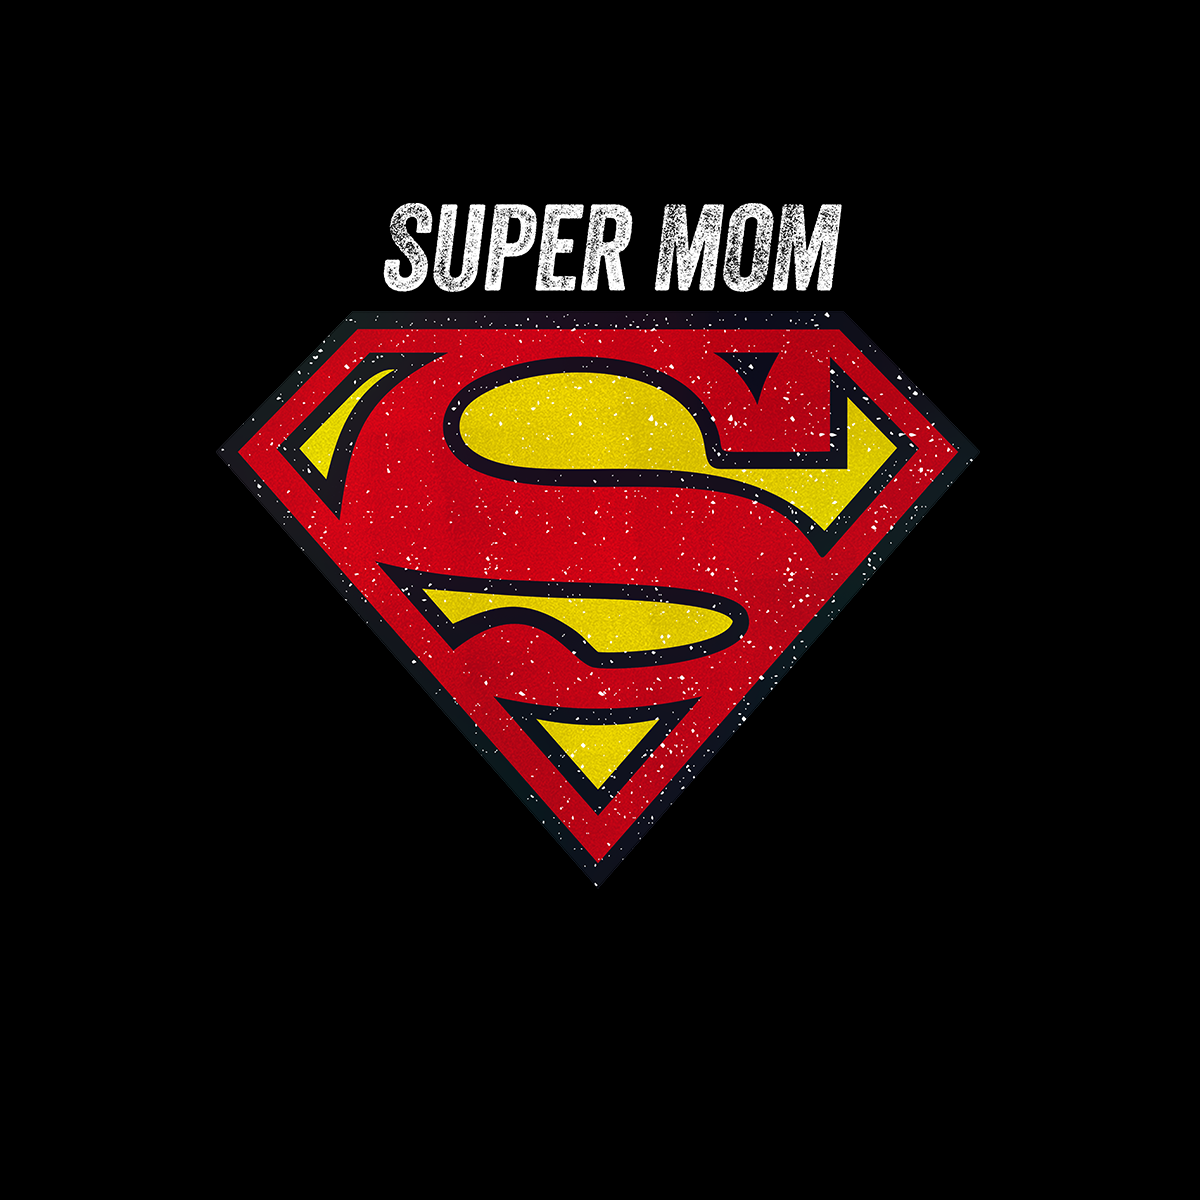 Super Mom Retro Superman DC Comix Action Hero Unisex Tank Top - Kuzi Tees